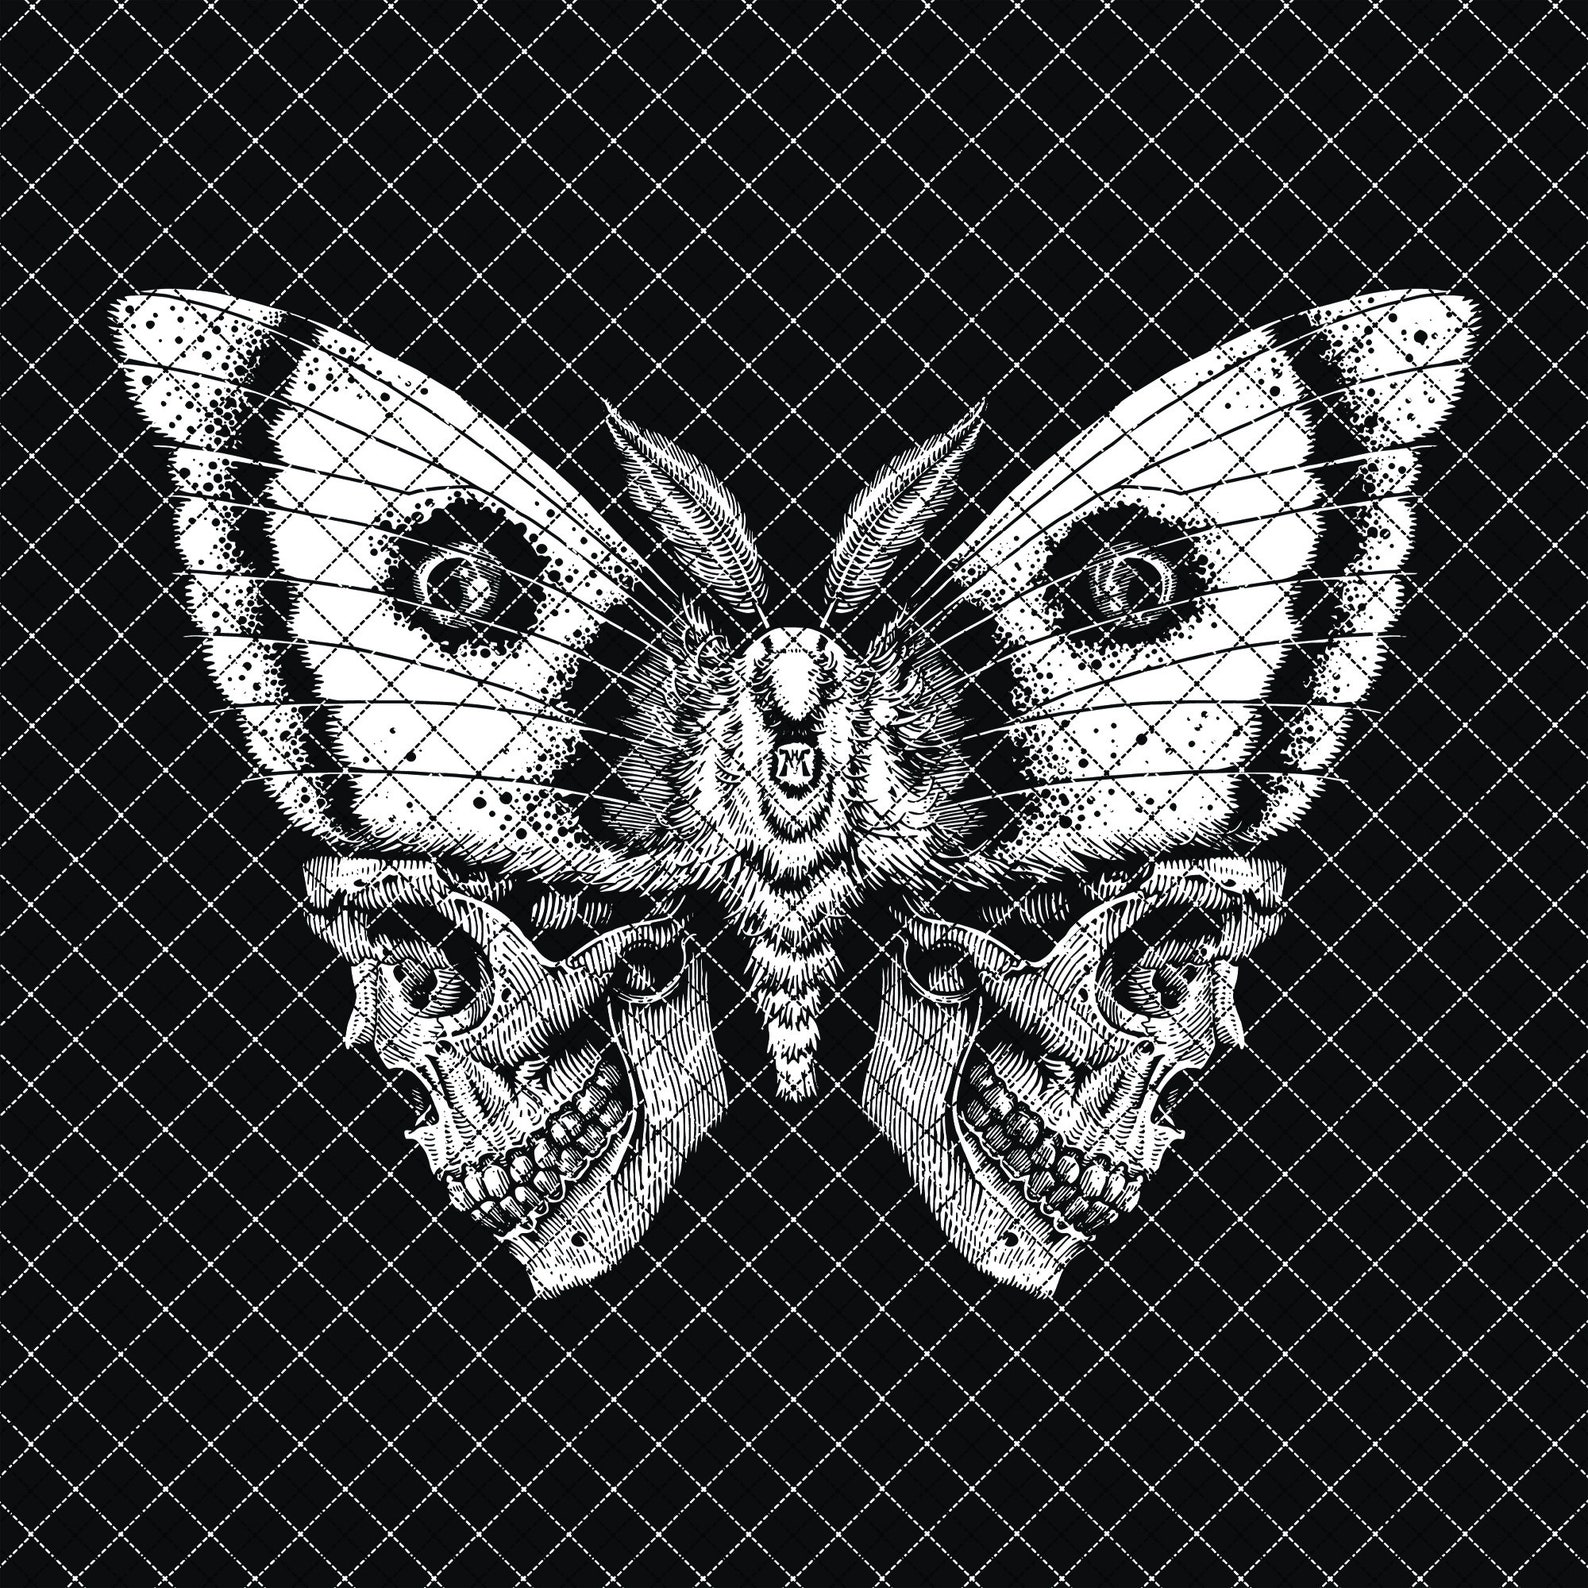 Skull Butterfly Svg Skeleton Butterfly Svg Halloween Svg Etsy